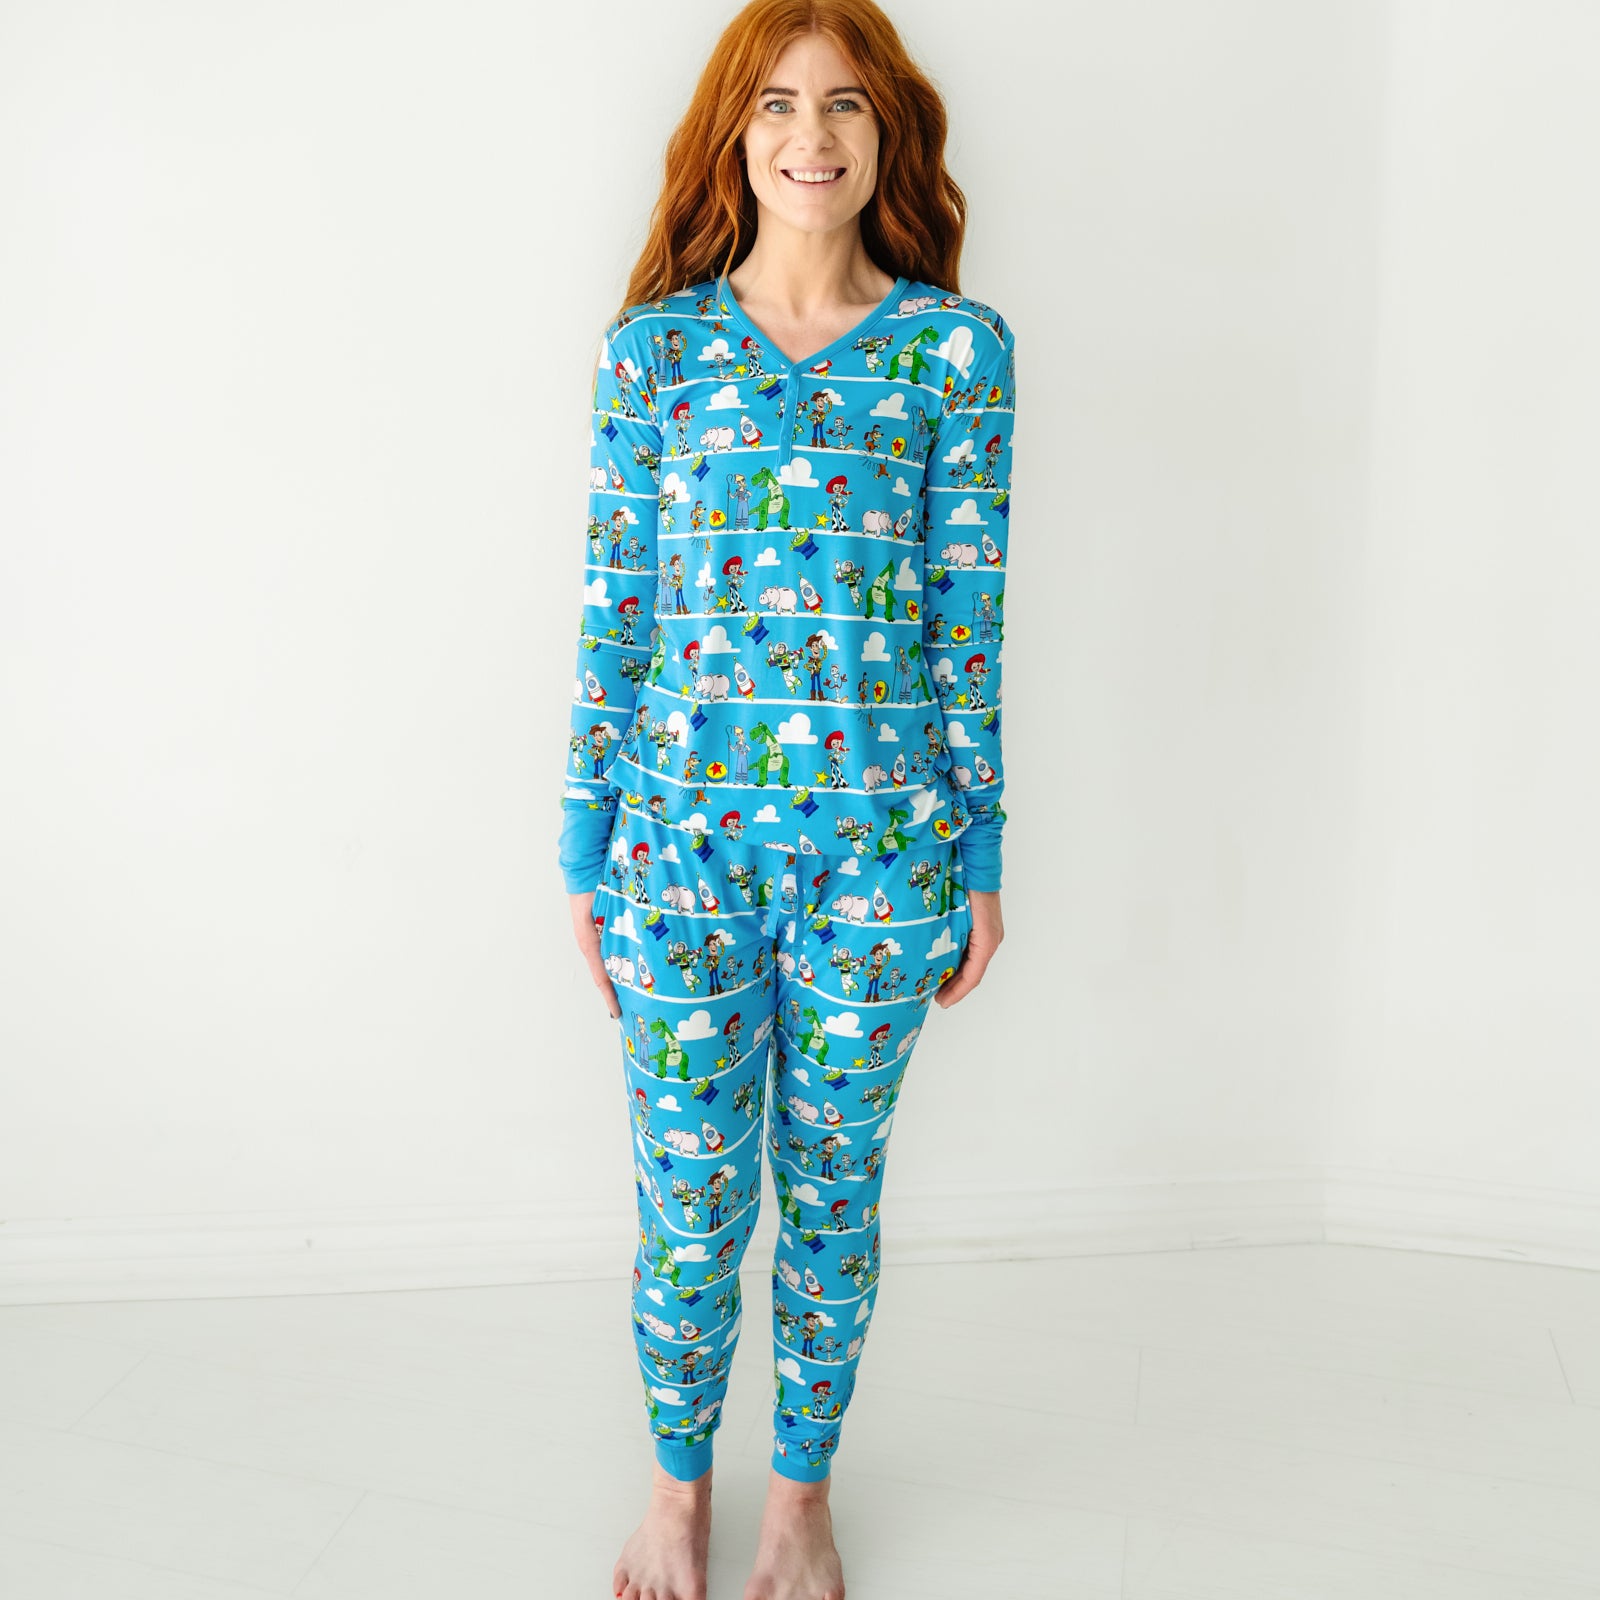 Alternate image of a woman wearing a Disney Pixar Toy Story Pals women's pajama top and matching pajama pants